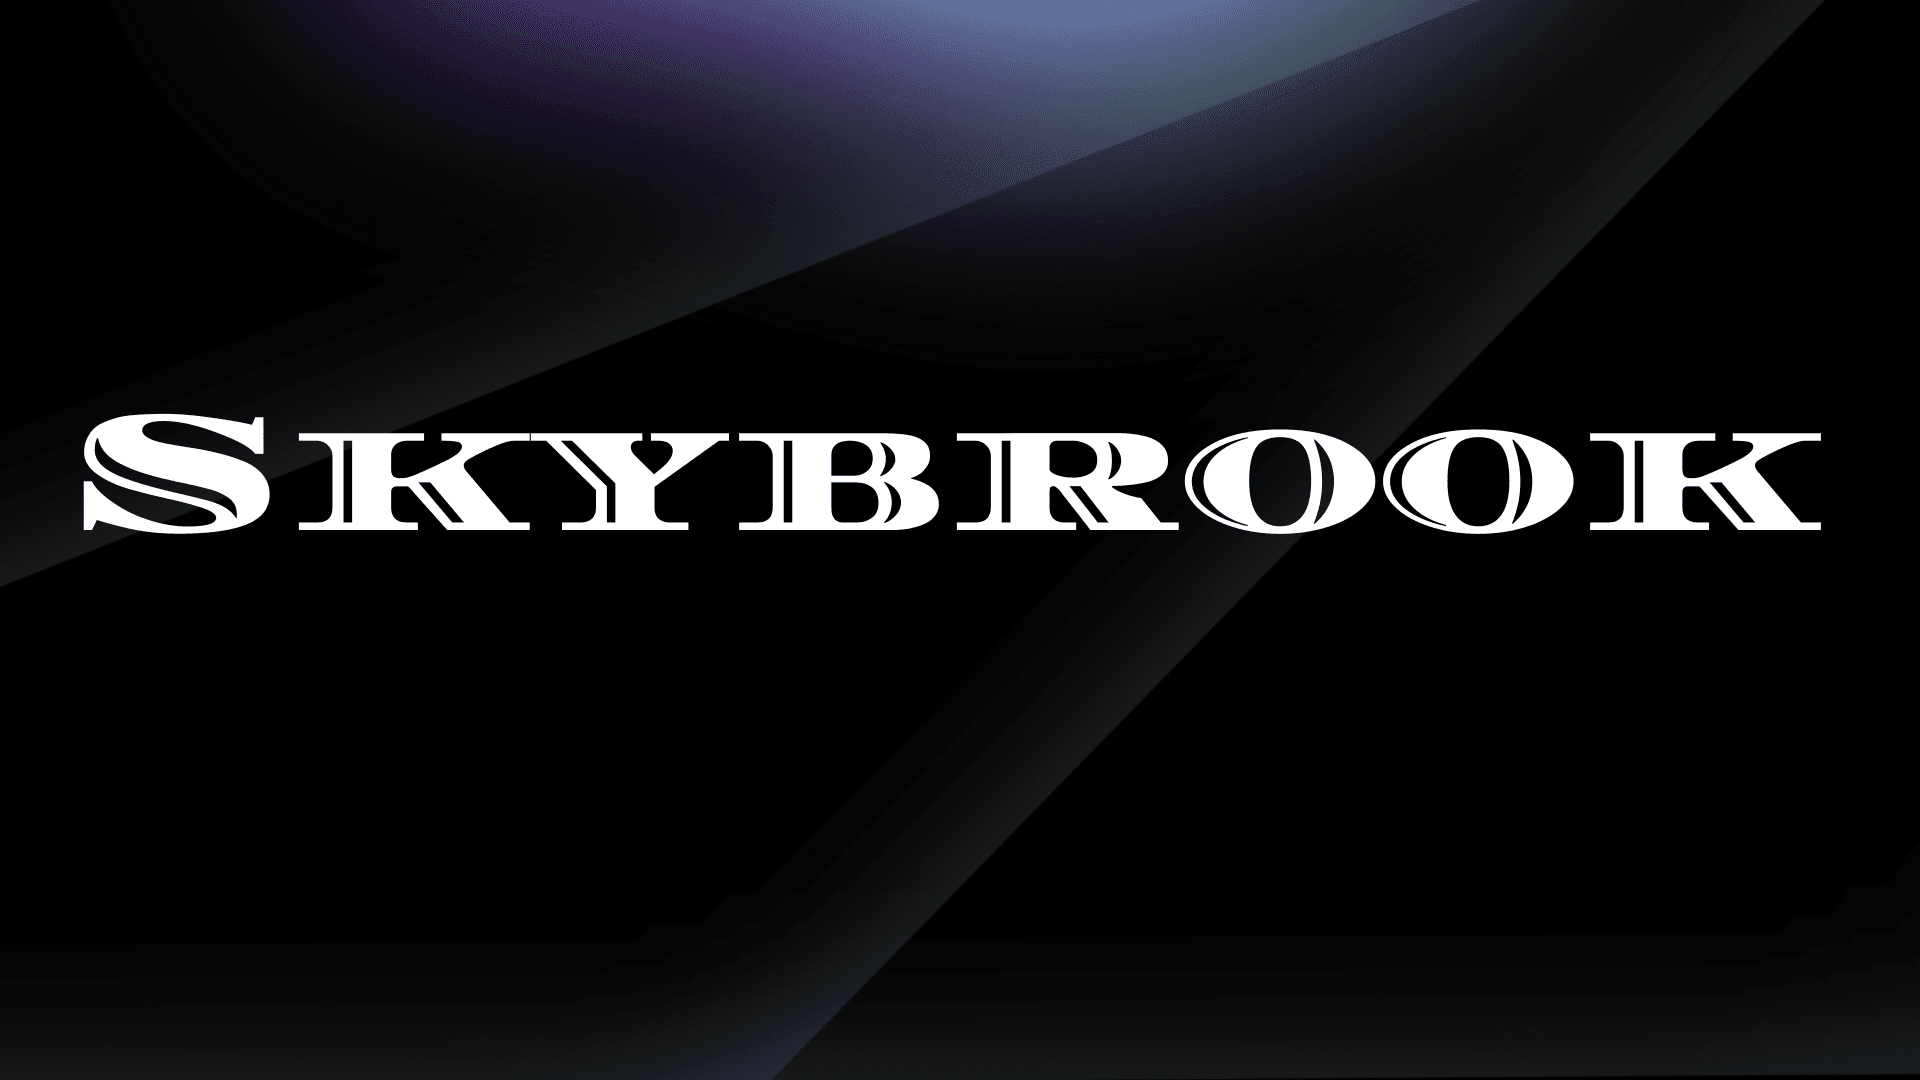 Skybrook banner